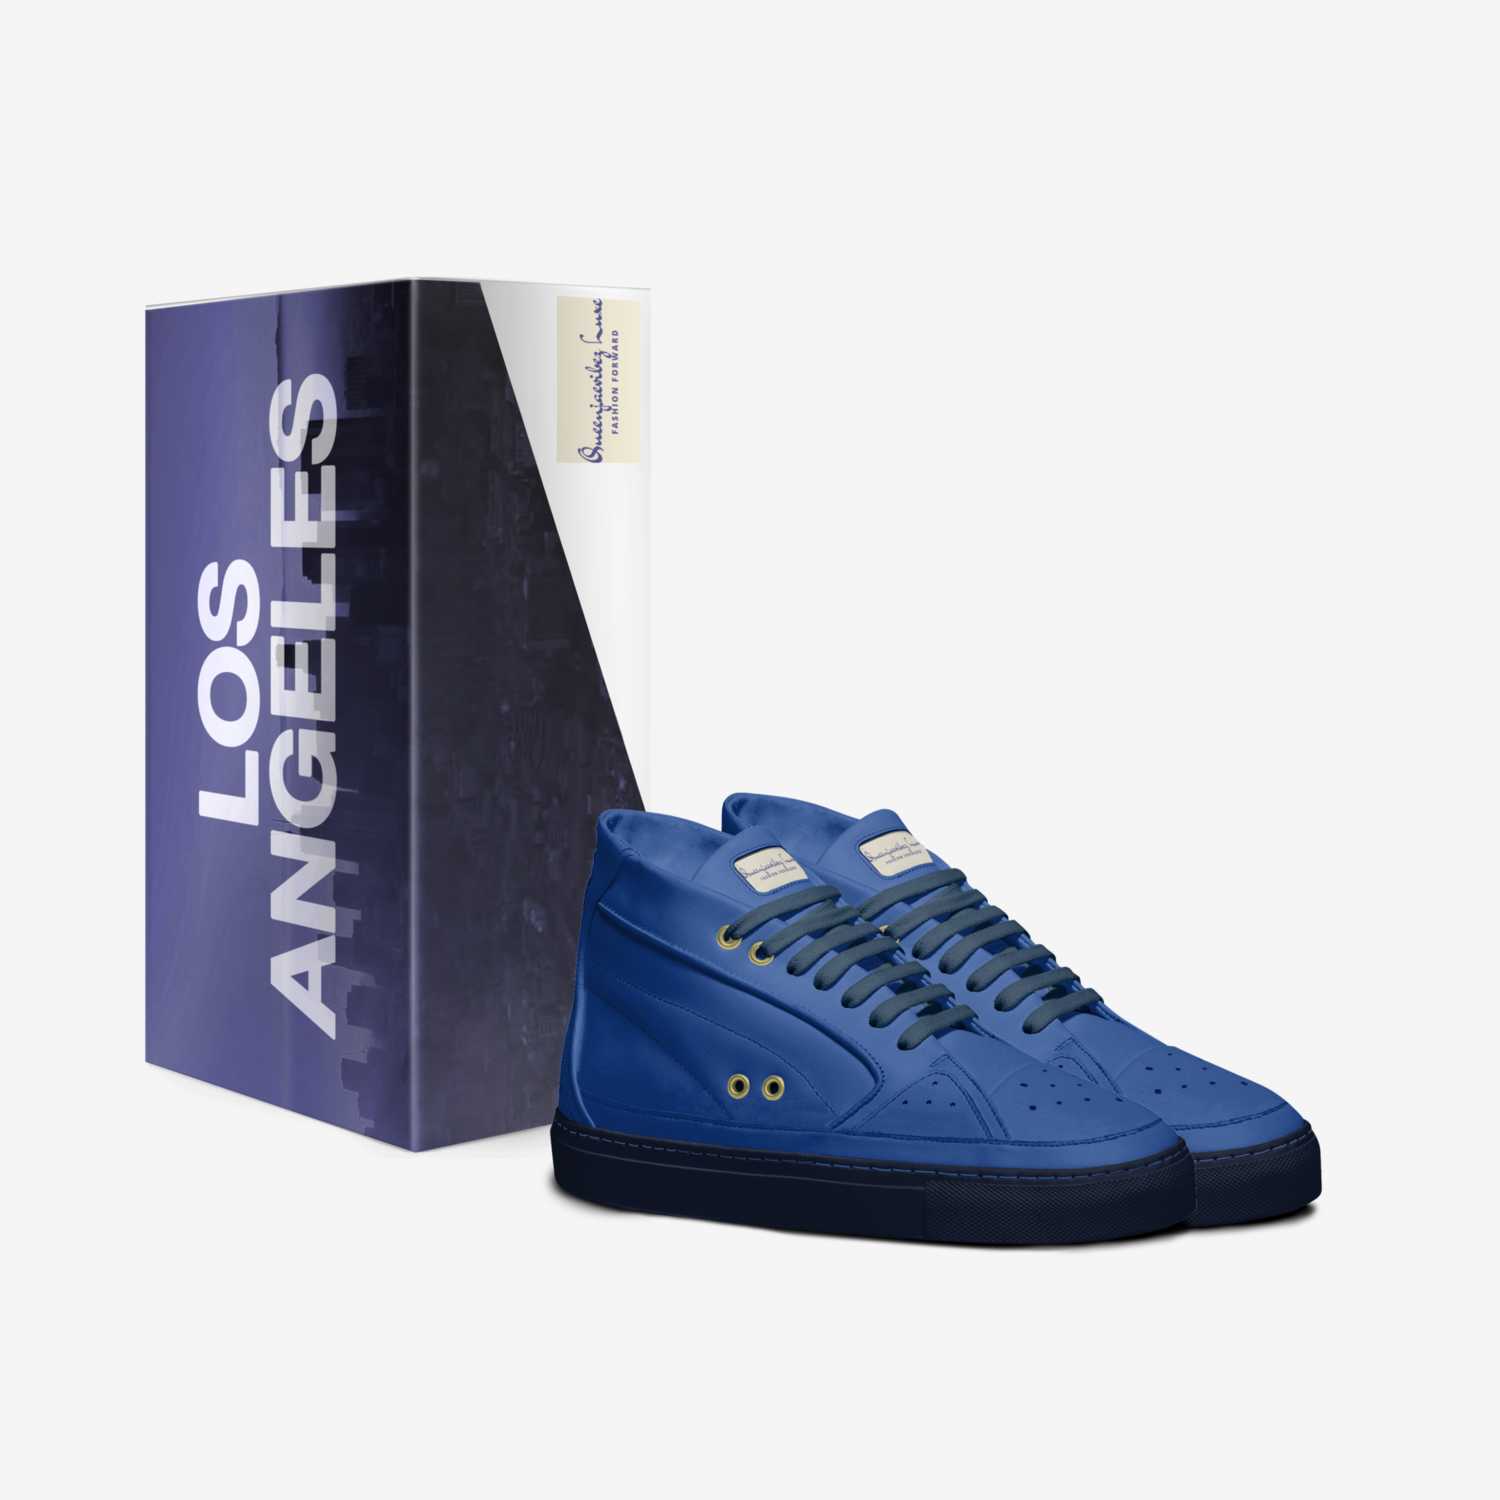 Nipsey Blue  custom made in Italy shoes by Jocelyn Joe | Box view